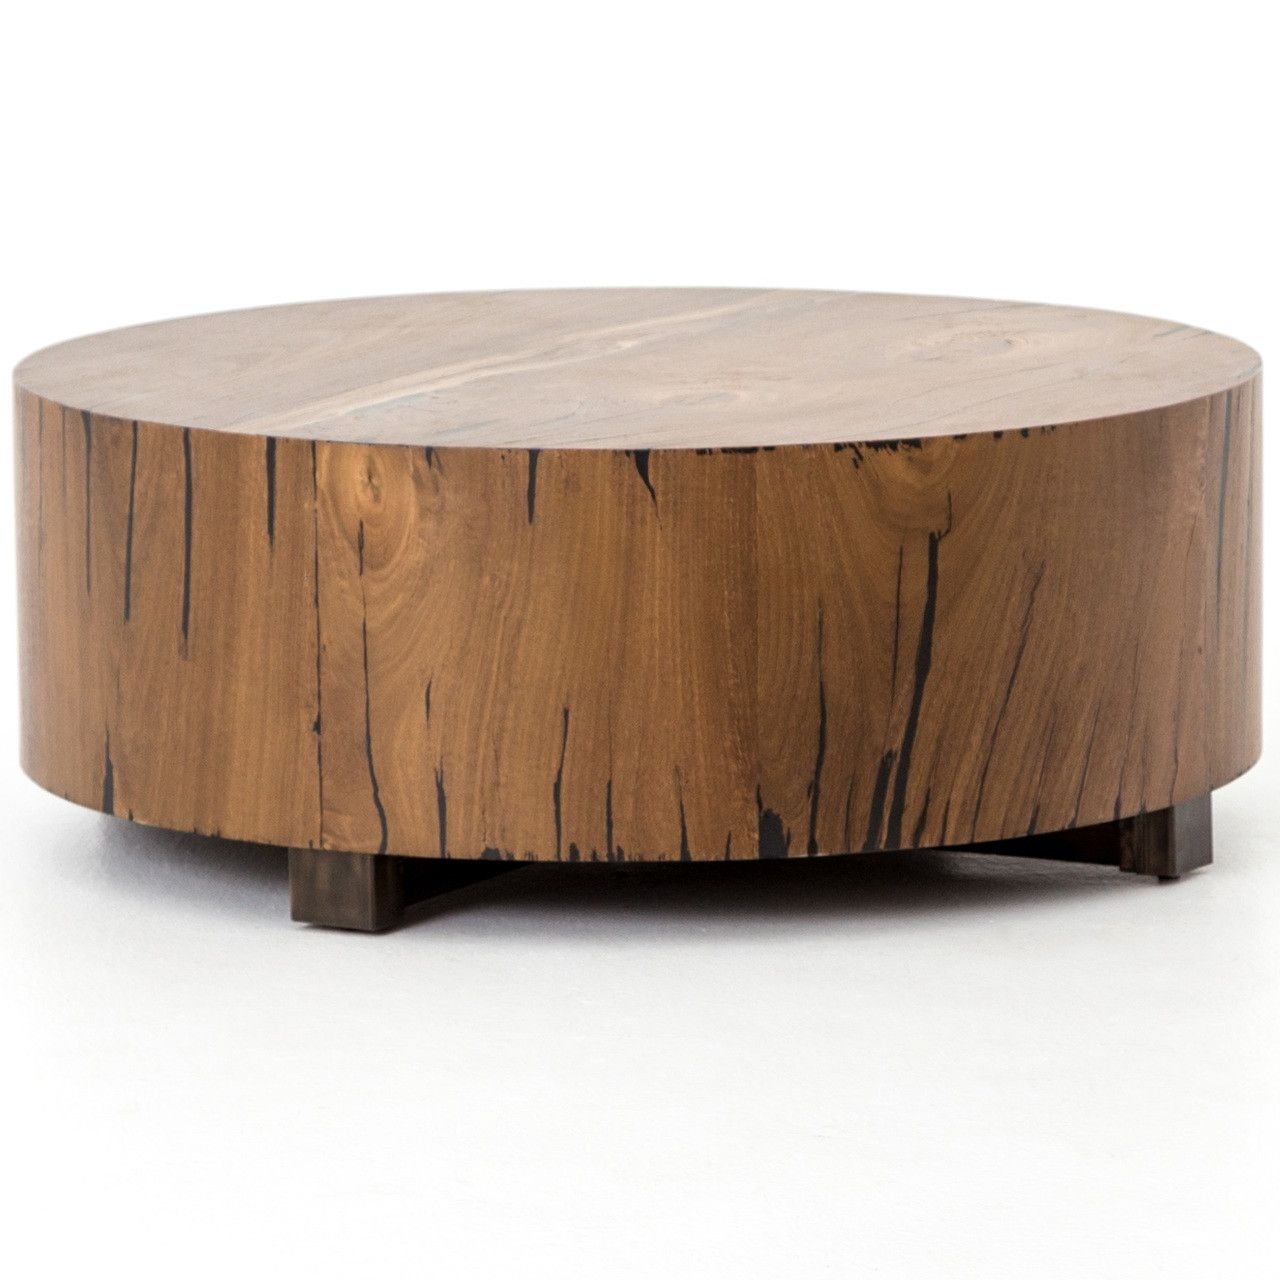 Hudson Round Natural Yukas Wood Block Coffee Table | Zin Home With Coffee Tables With Round Wooden Tops (Photo 4 of 15)